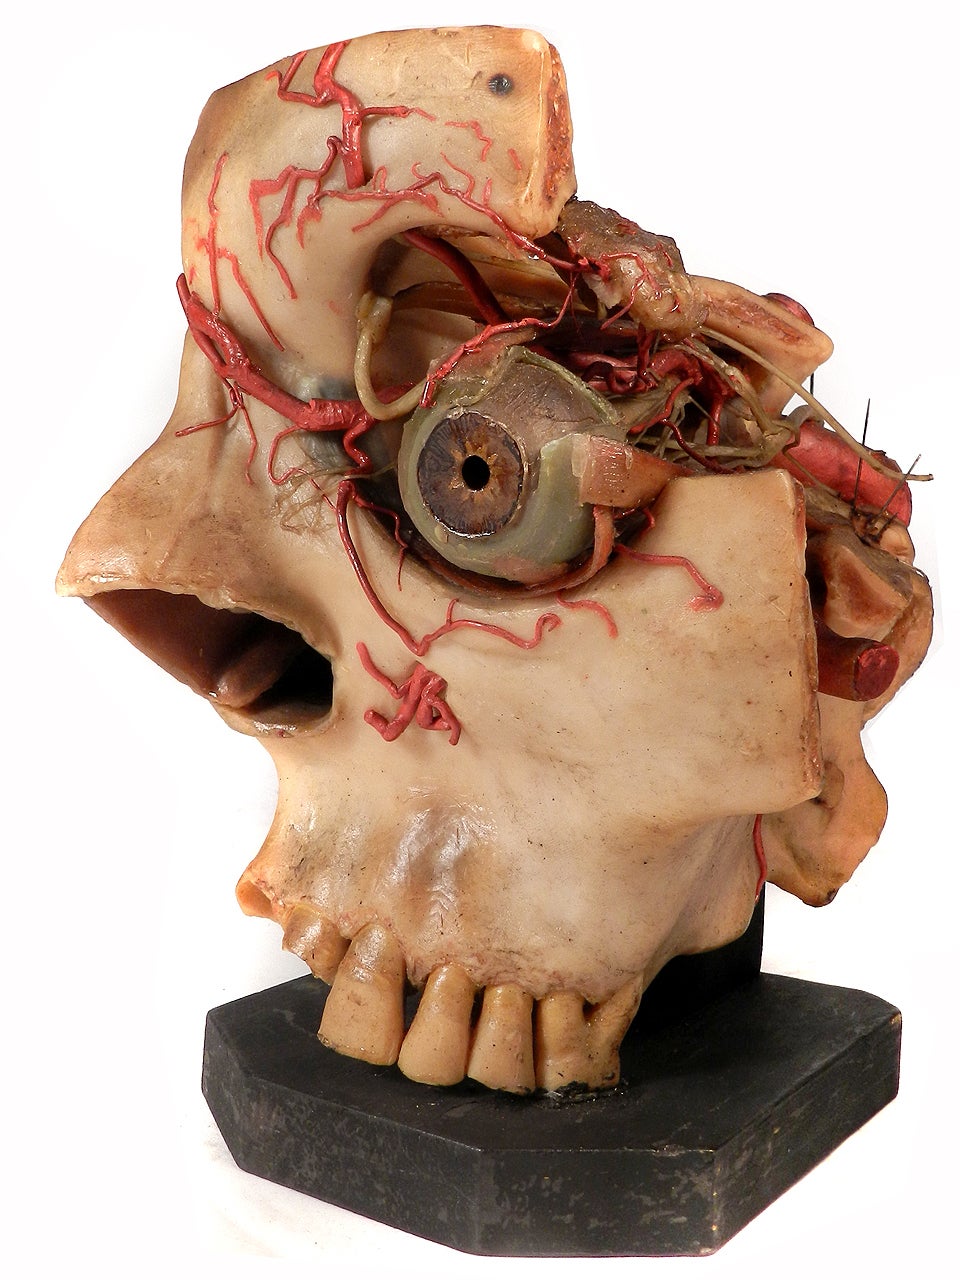 Oversized Wax Anatomical Model - 1800s